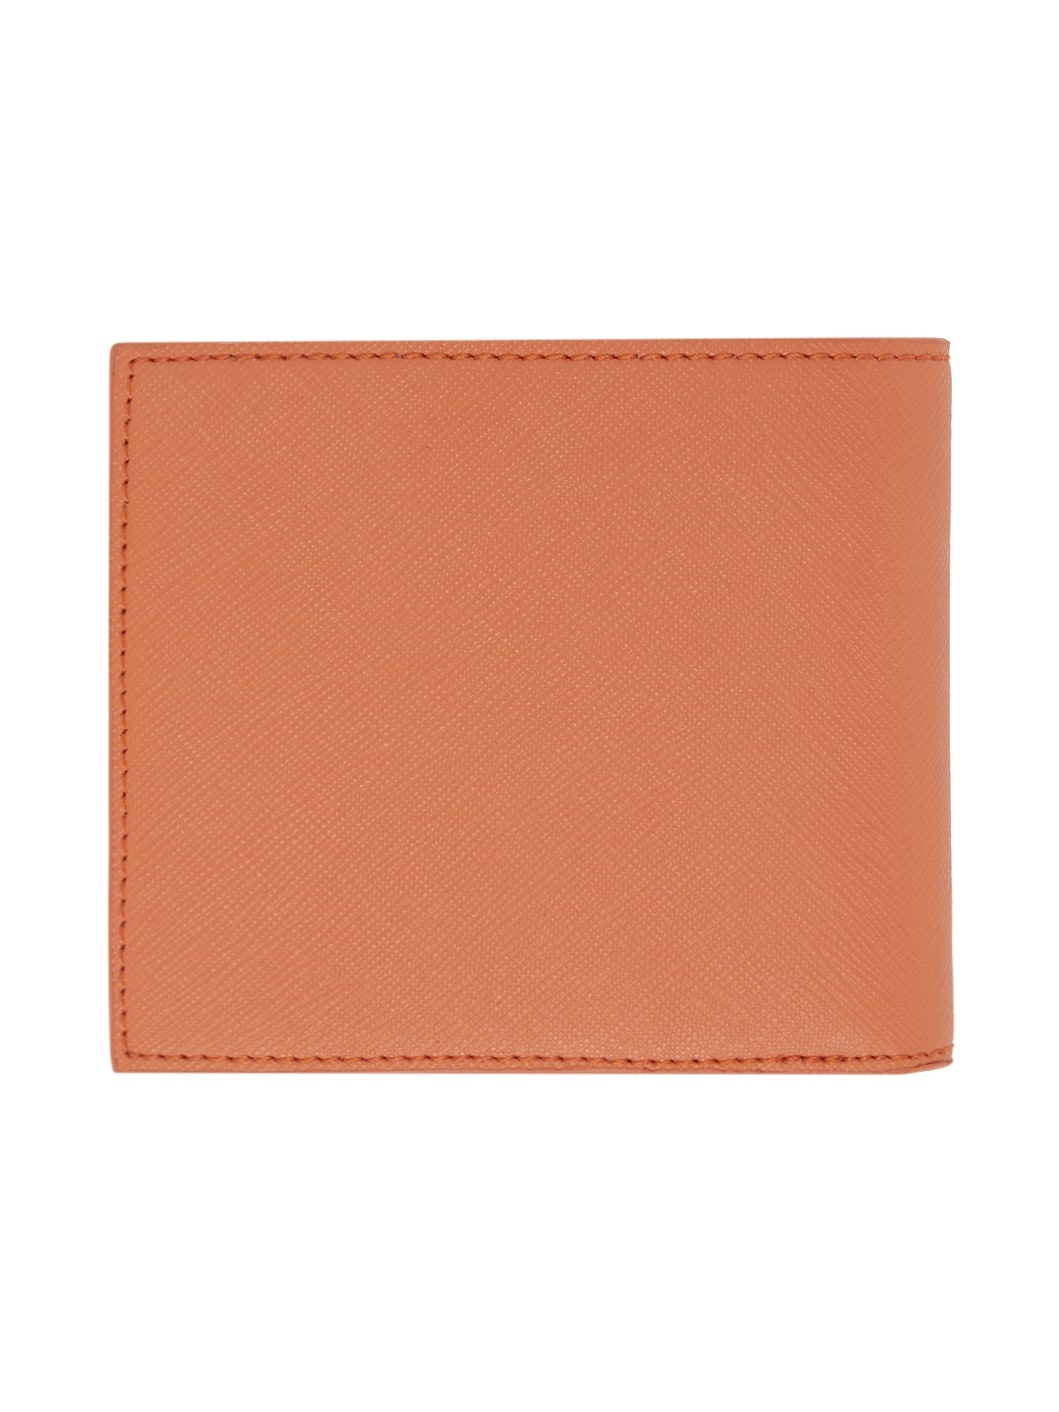 Orange Billfold Wallet - 2